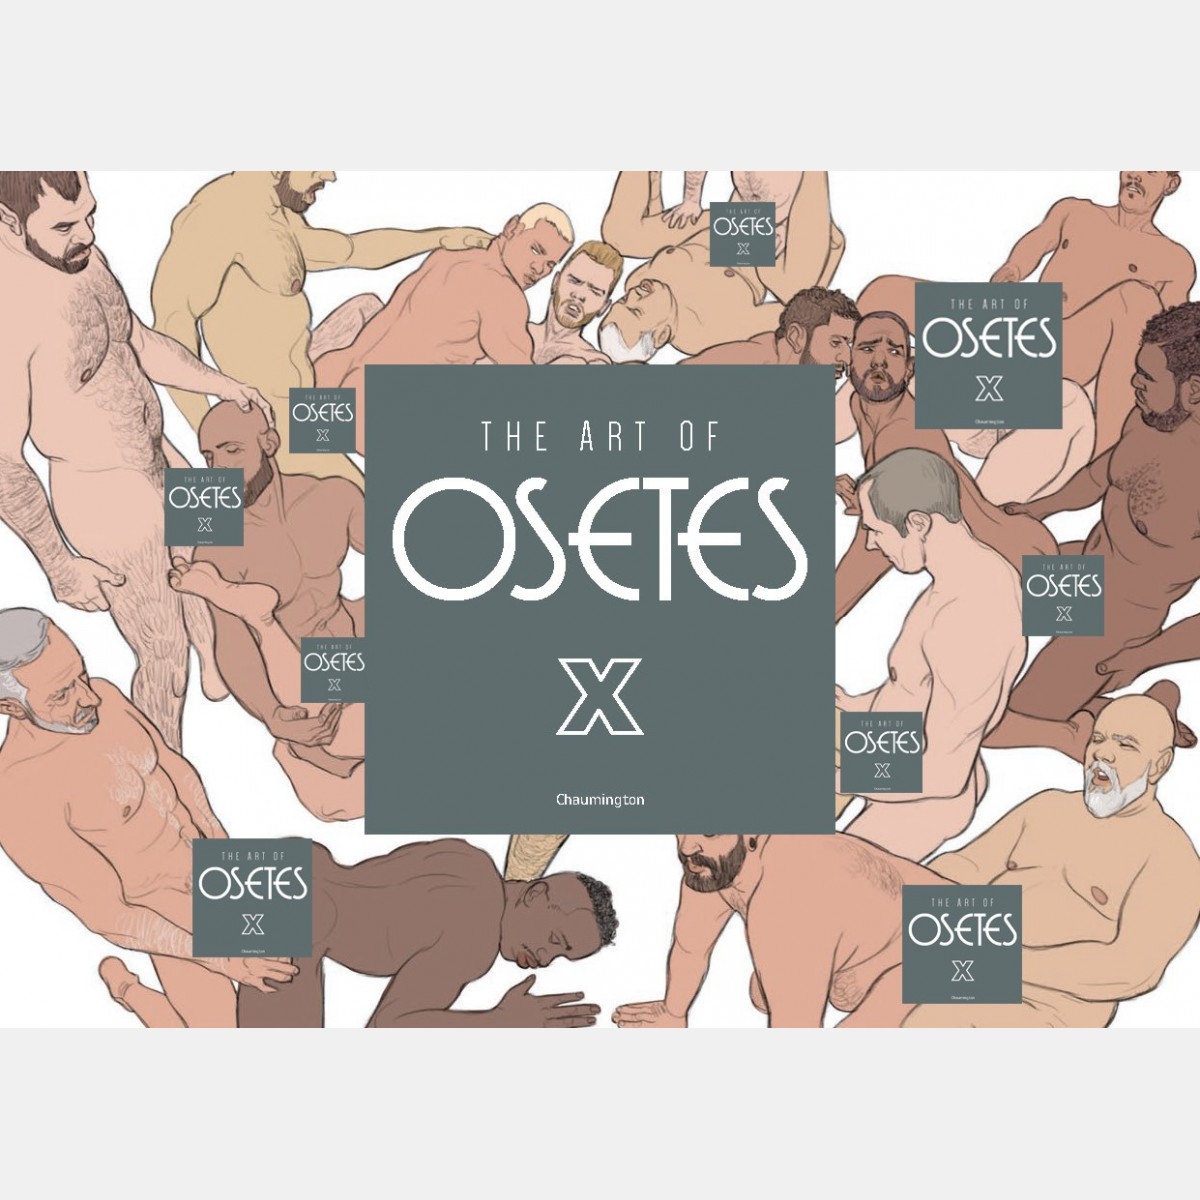 The Art of Osetes X